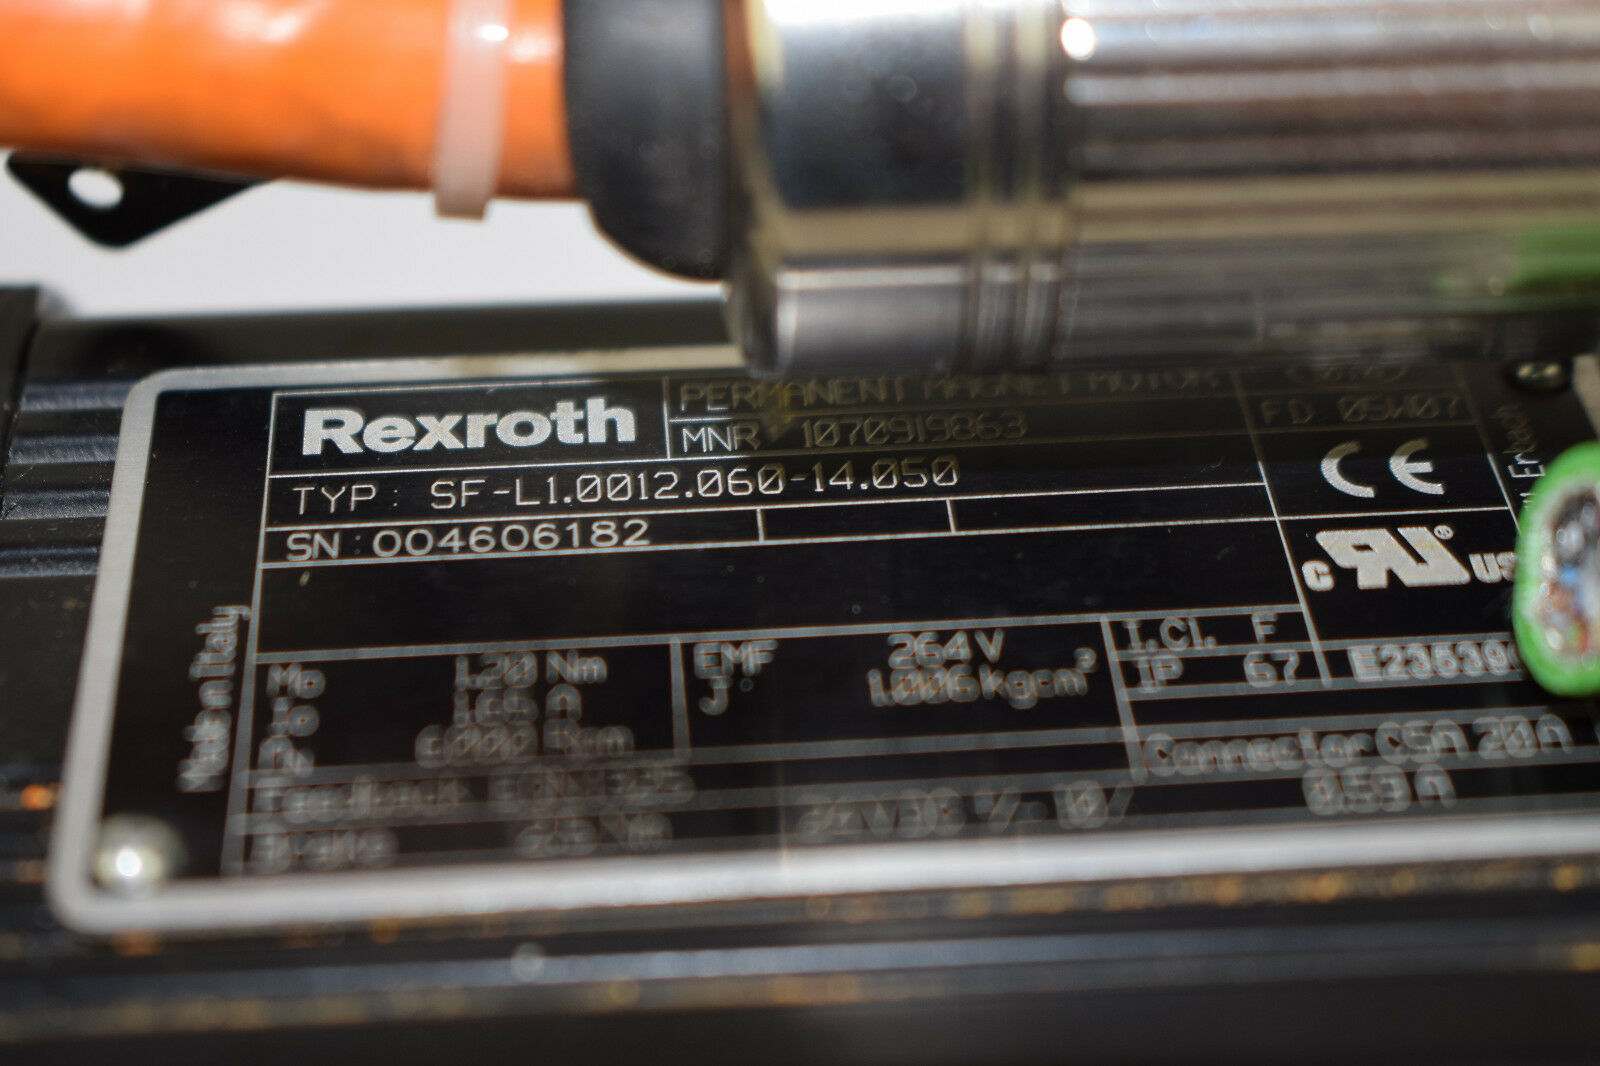 Rexroth Permanent Magnet Motor SF-L1.0012.060-14.050